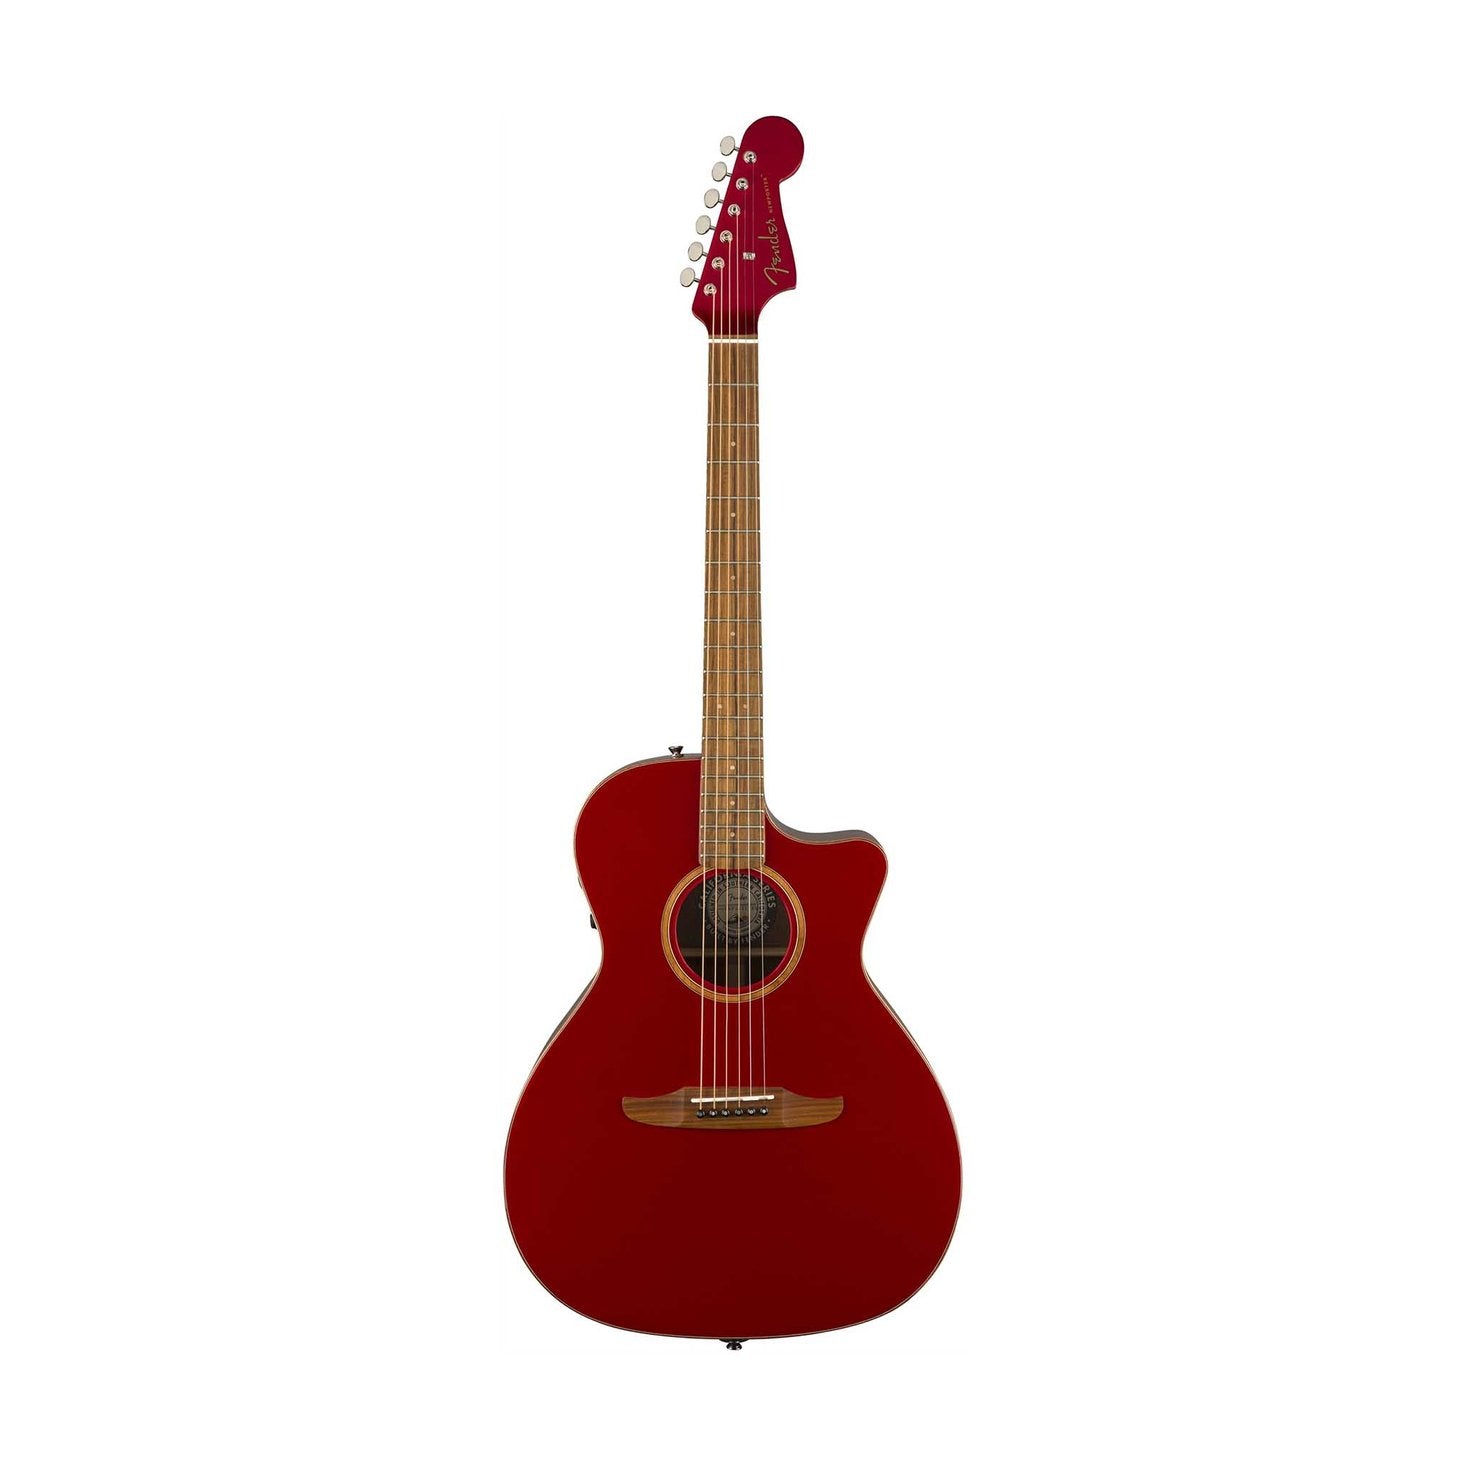 Fender Newporter Classic Medium-Sized Acoustic Guitar w/Bag, Hot Rod Red Metallic, FENDER, ACOUSTIC GUITAR, fender-acoustic-guitar-f03-097-0943-215, ZOSO MUSIC SDN BHD